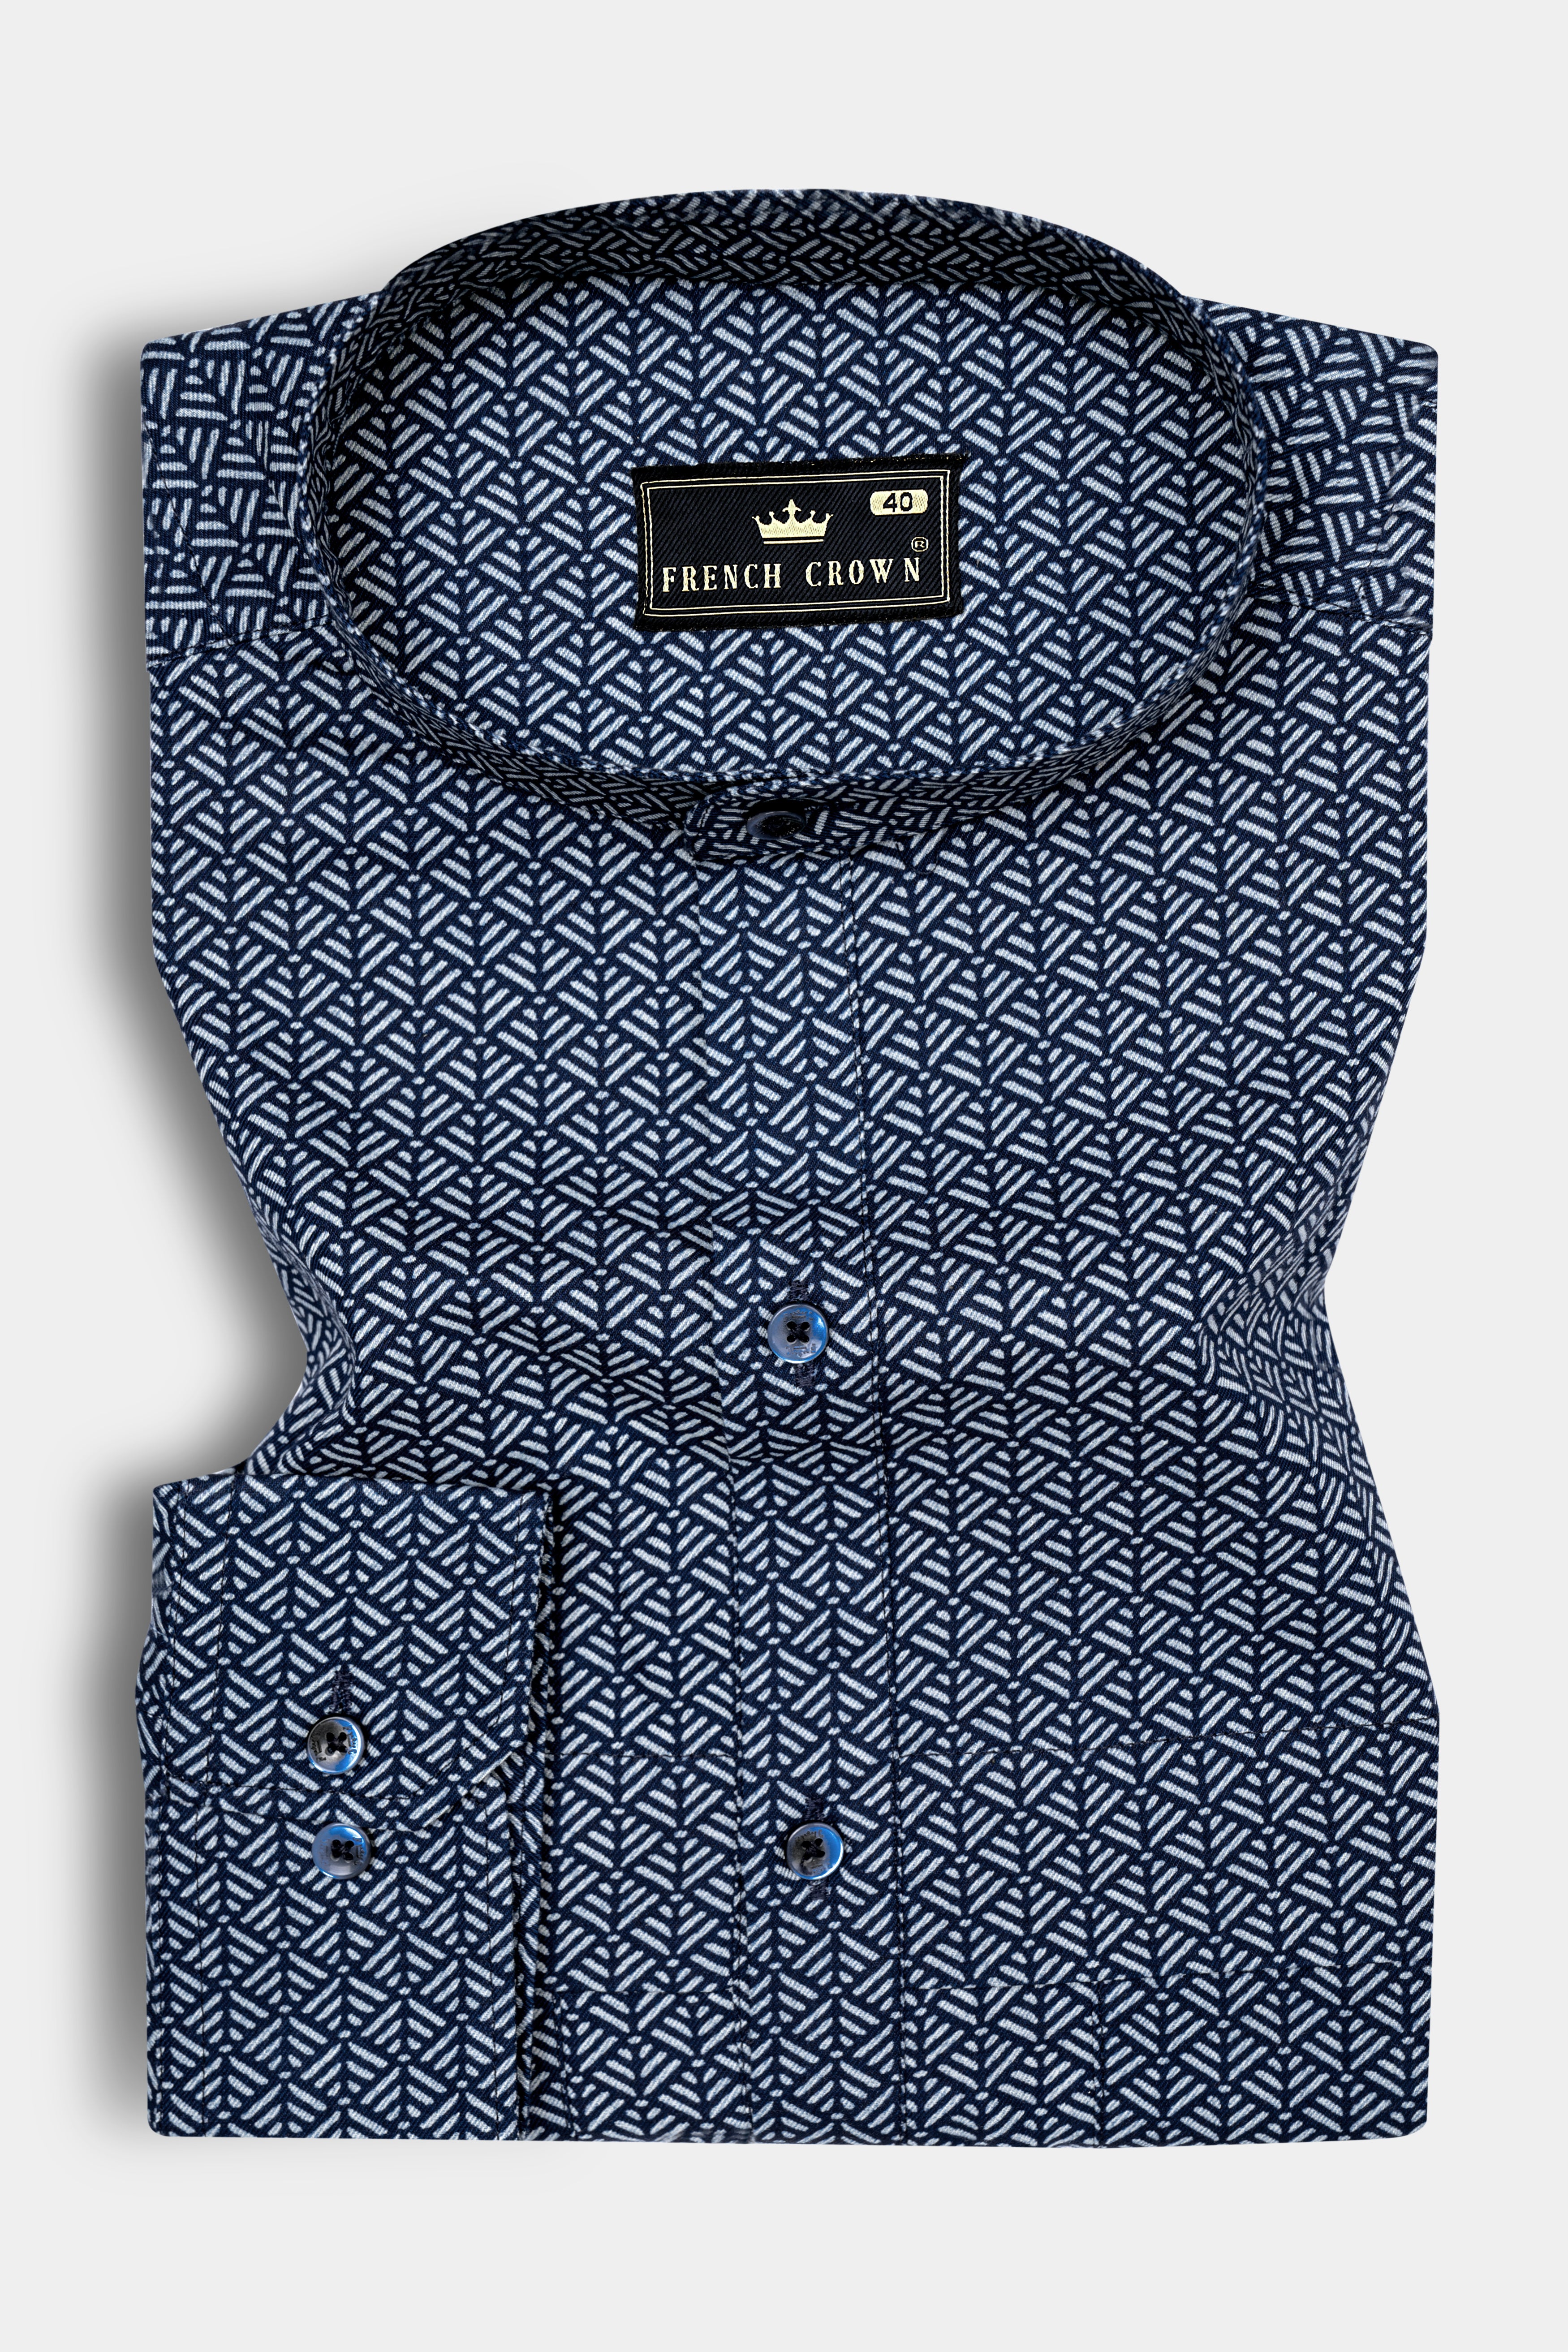 Haiti Blue Twill Prints Premium Cotton Shirt